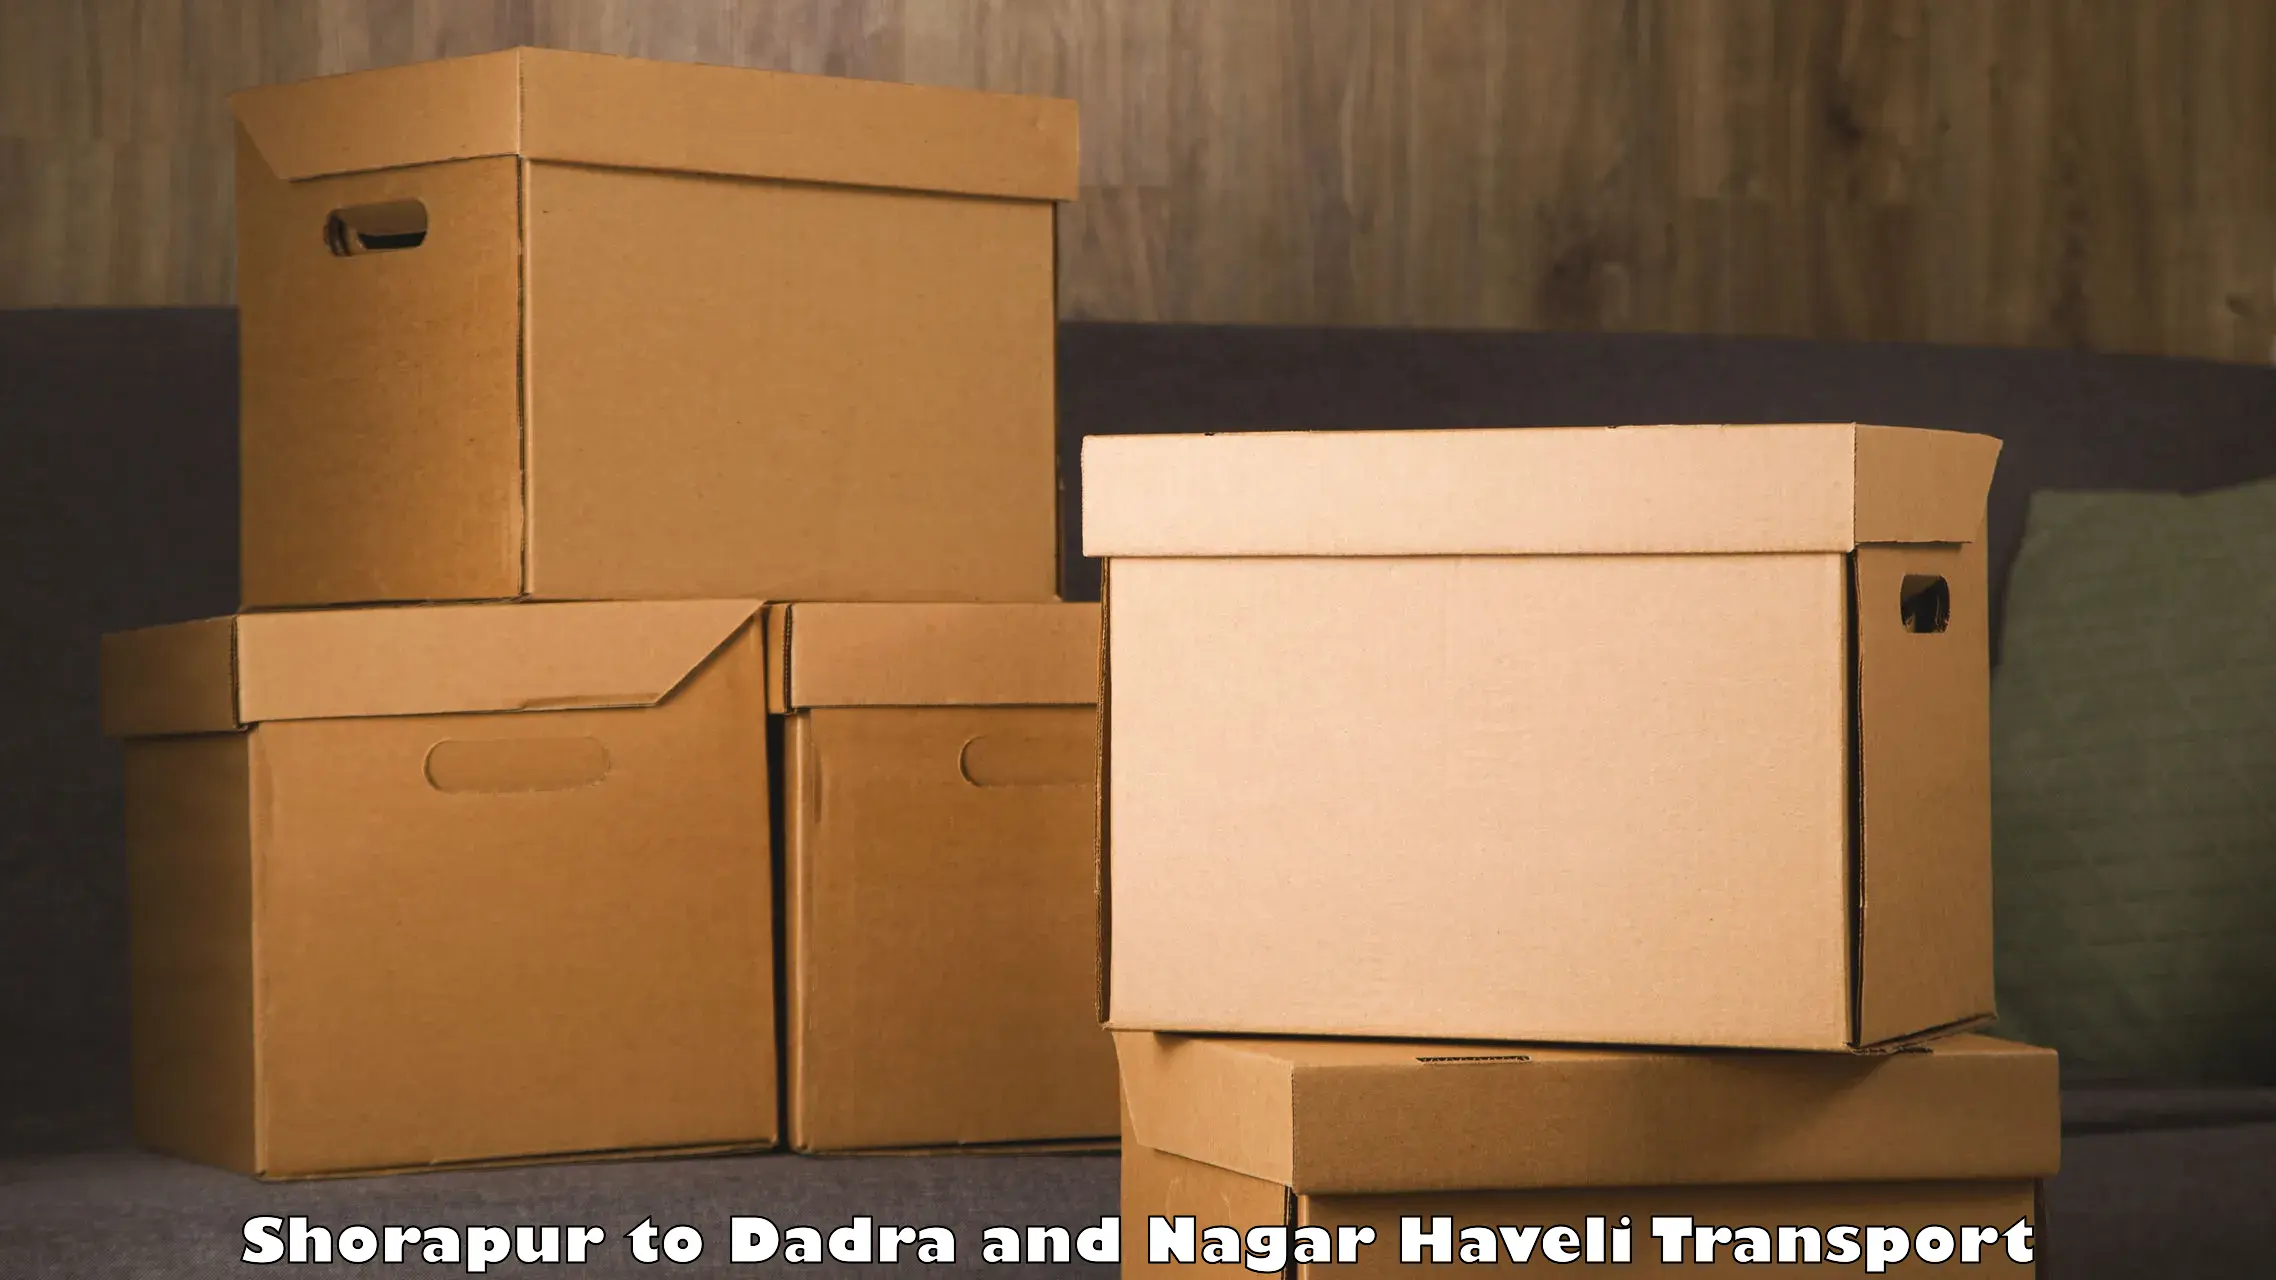 Two wheeler parcel service Shorapur to Dadra and Nagar Haveli